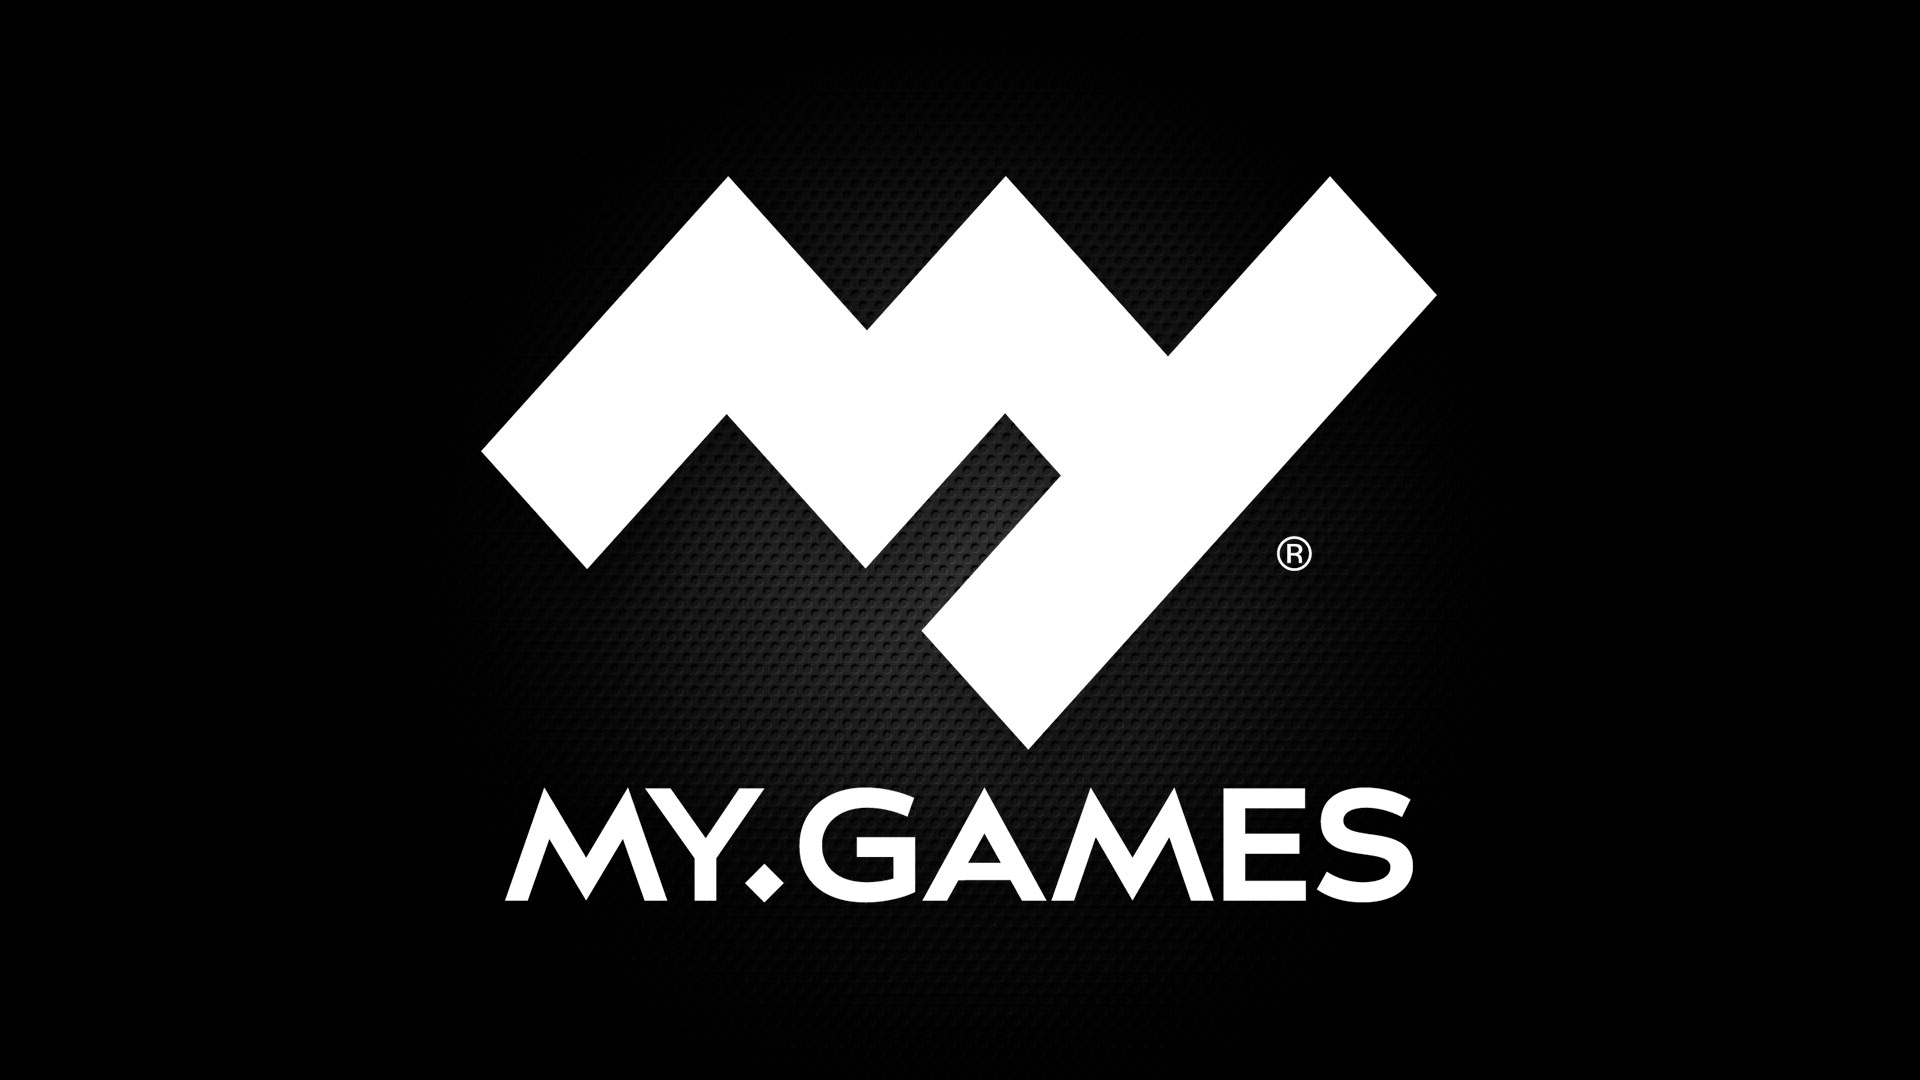 My games c. My games. My games логотип. Логотип майгеймс. Игровой центр логотип.